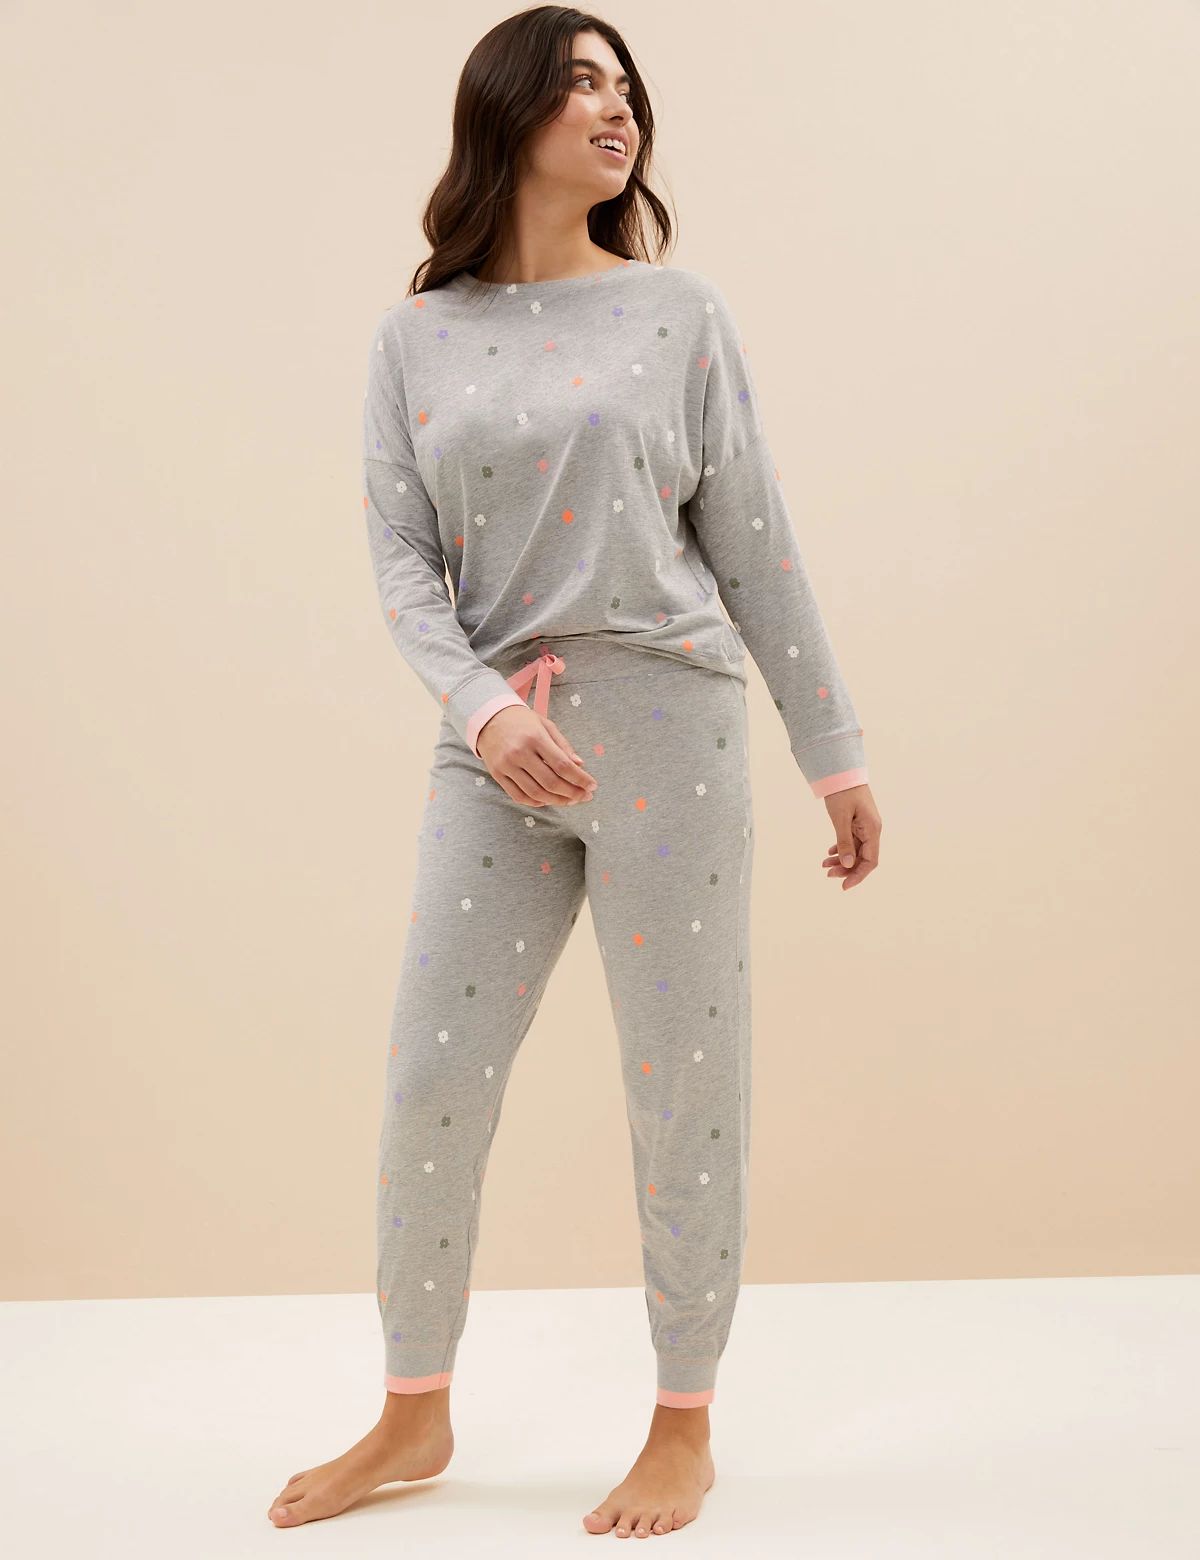 Noise cotton printed flowers pajama suit Grey